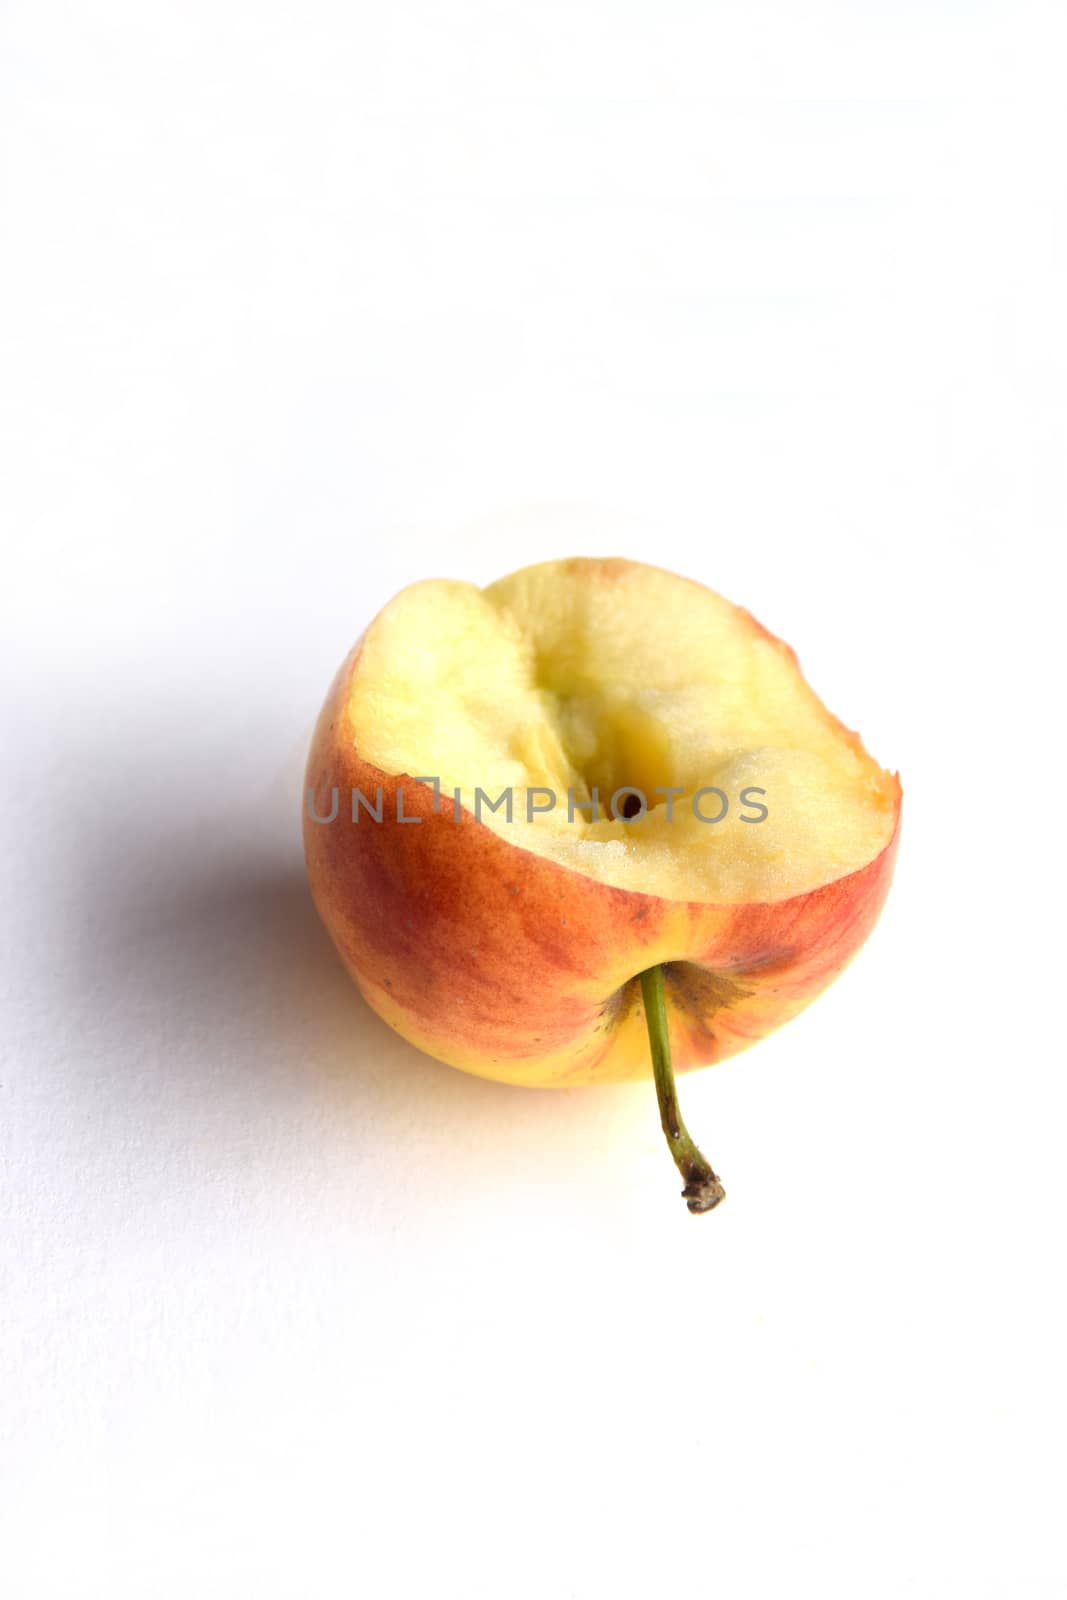 Bitten pink apple by kaidevil